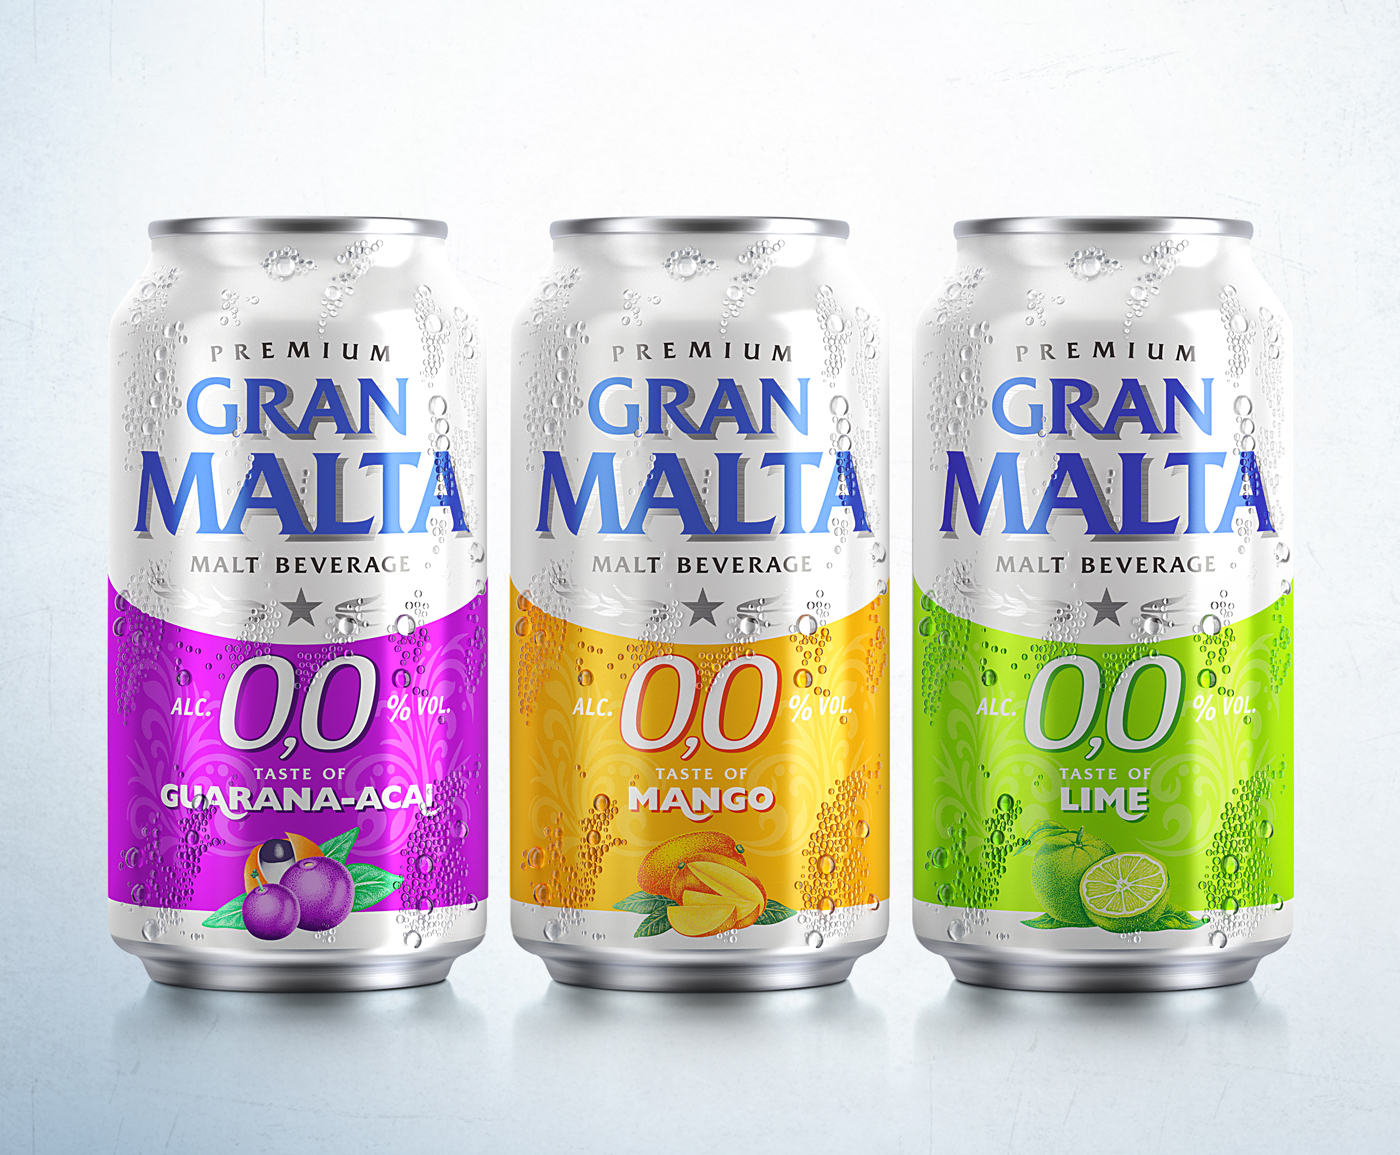 Gran Malta – malt beverage